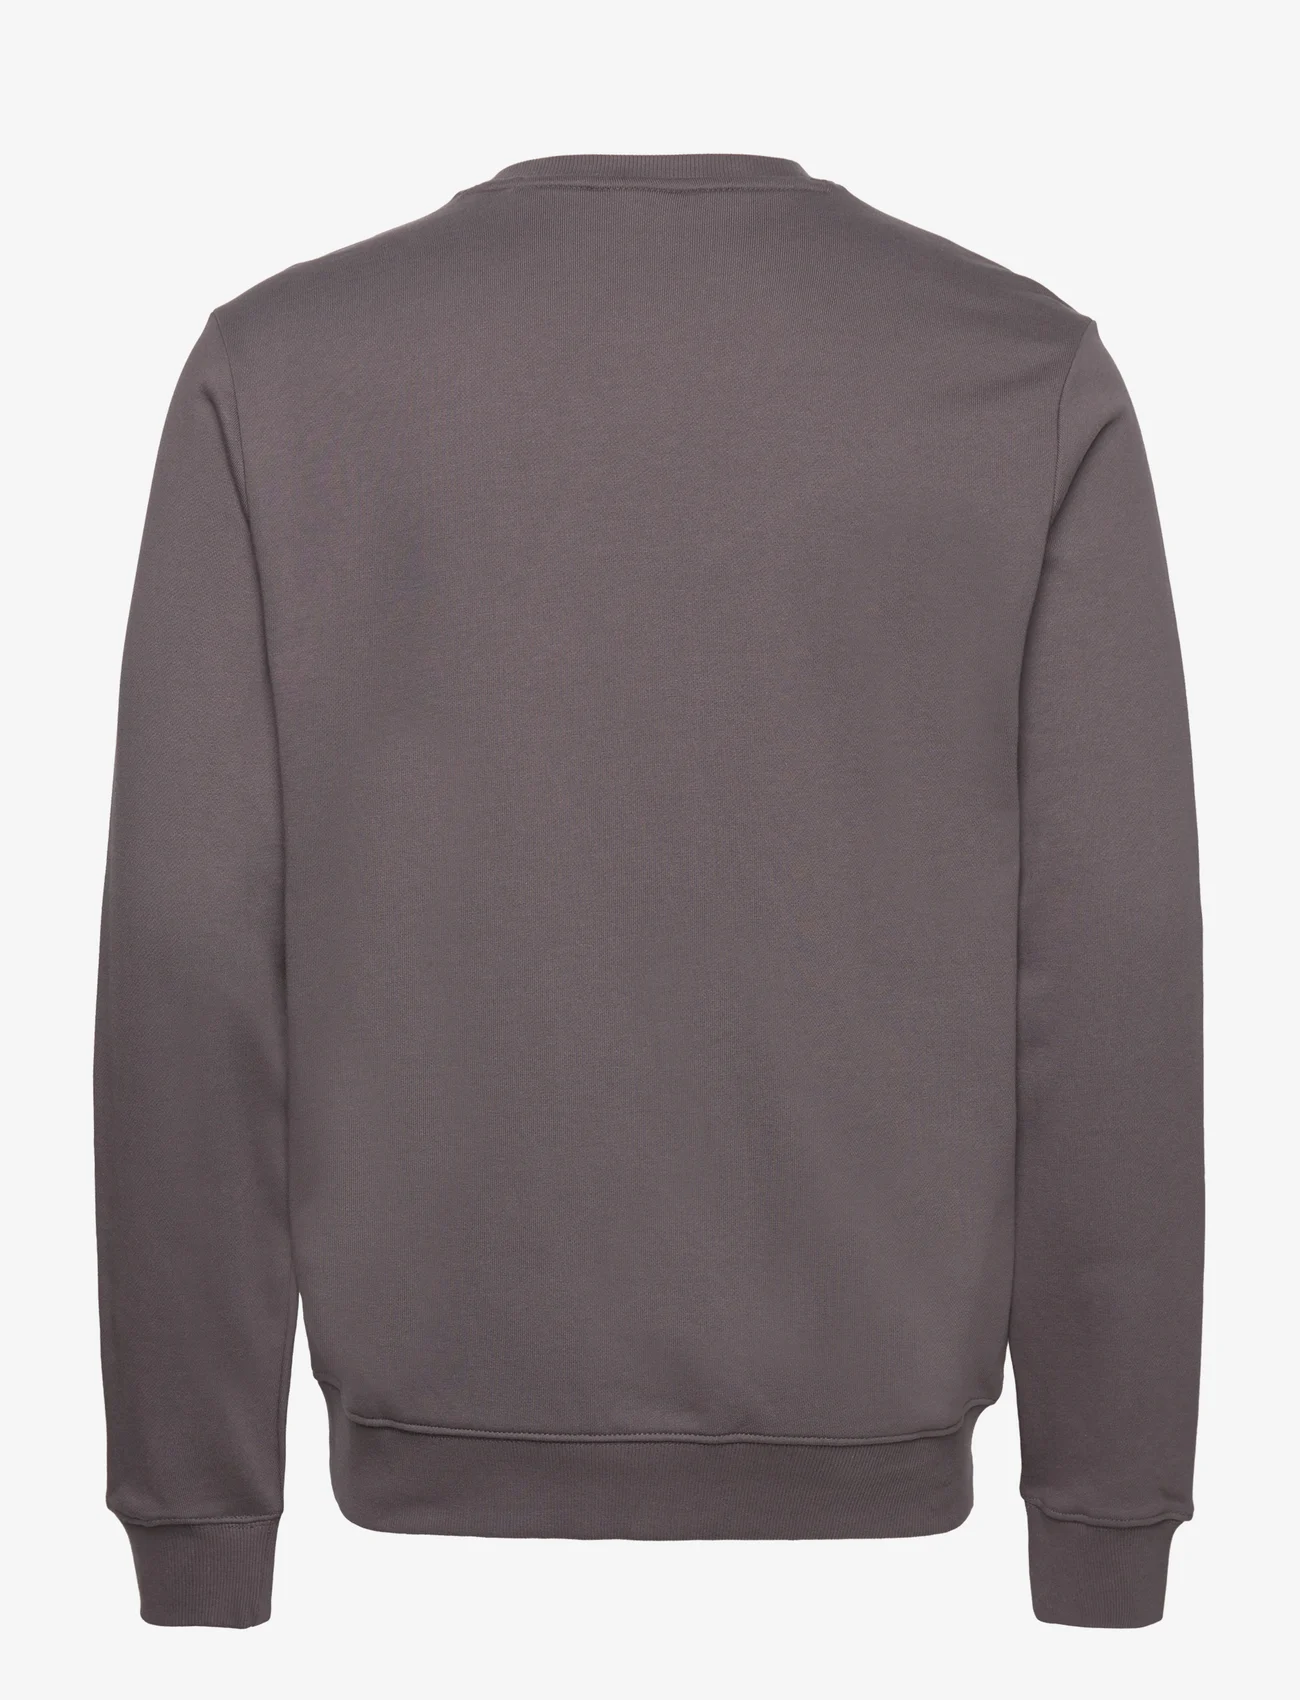 HUGO - Dem - sweatshirts - dark grey - 1